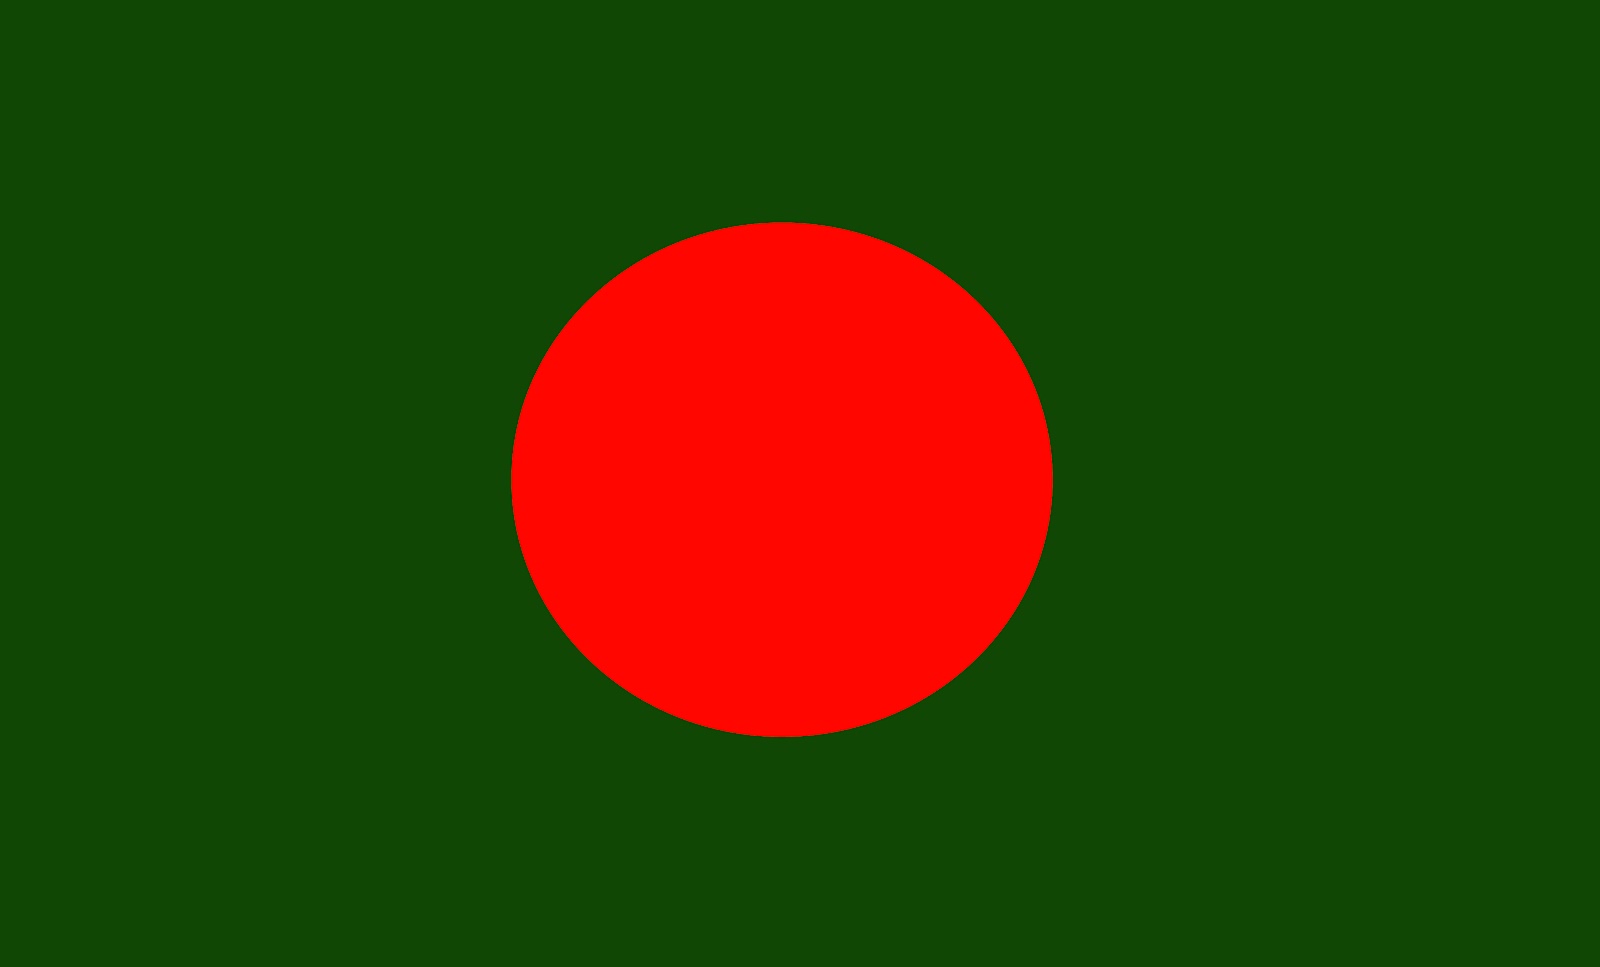 http://1.bp.blogspot.com/-zB_xOFHD18U/T_tEt5auPZI/AAAAAAAAAEU/KjiFjDro7_g/s1600/Bangladesh+1.jpg